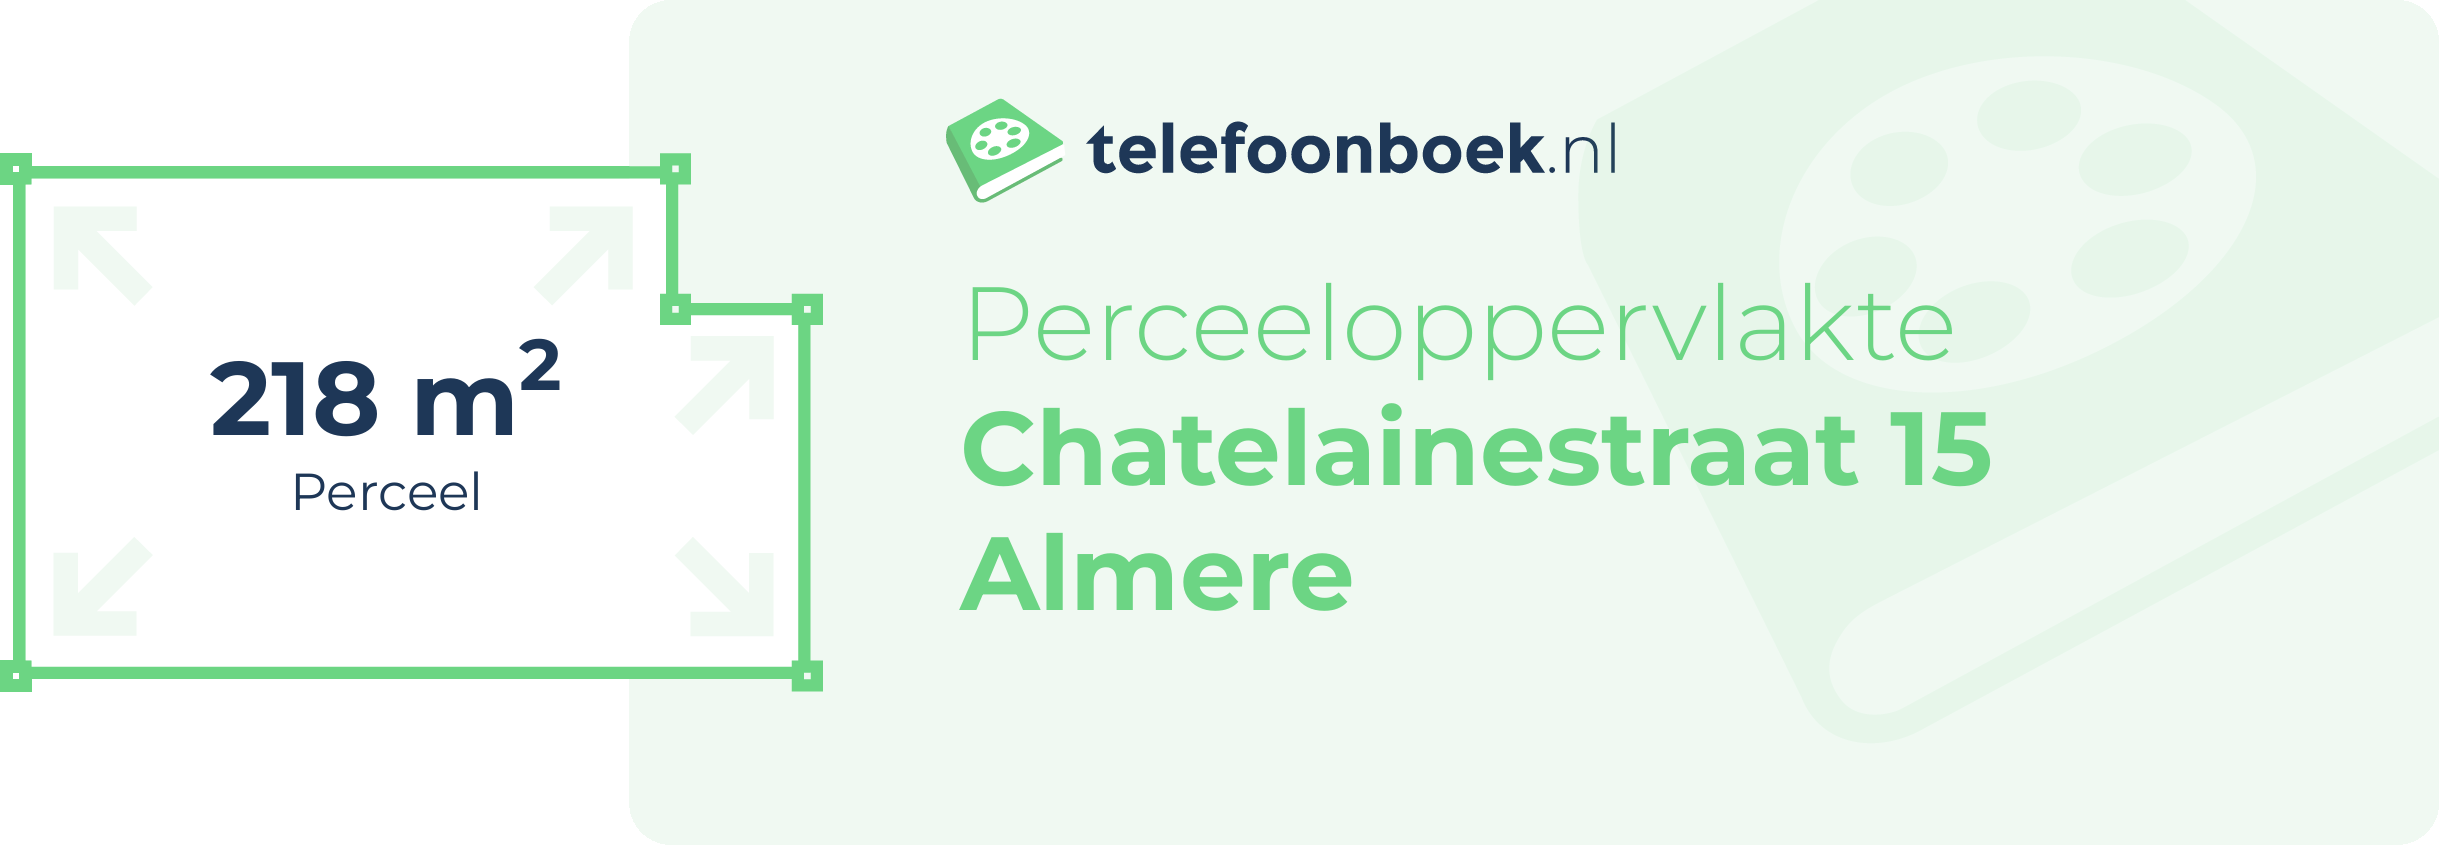 Perceeloppervlakte Chatelainestraat 15 Almere